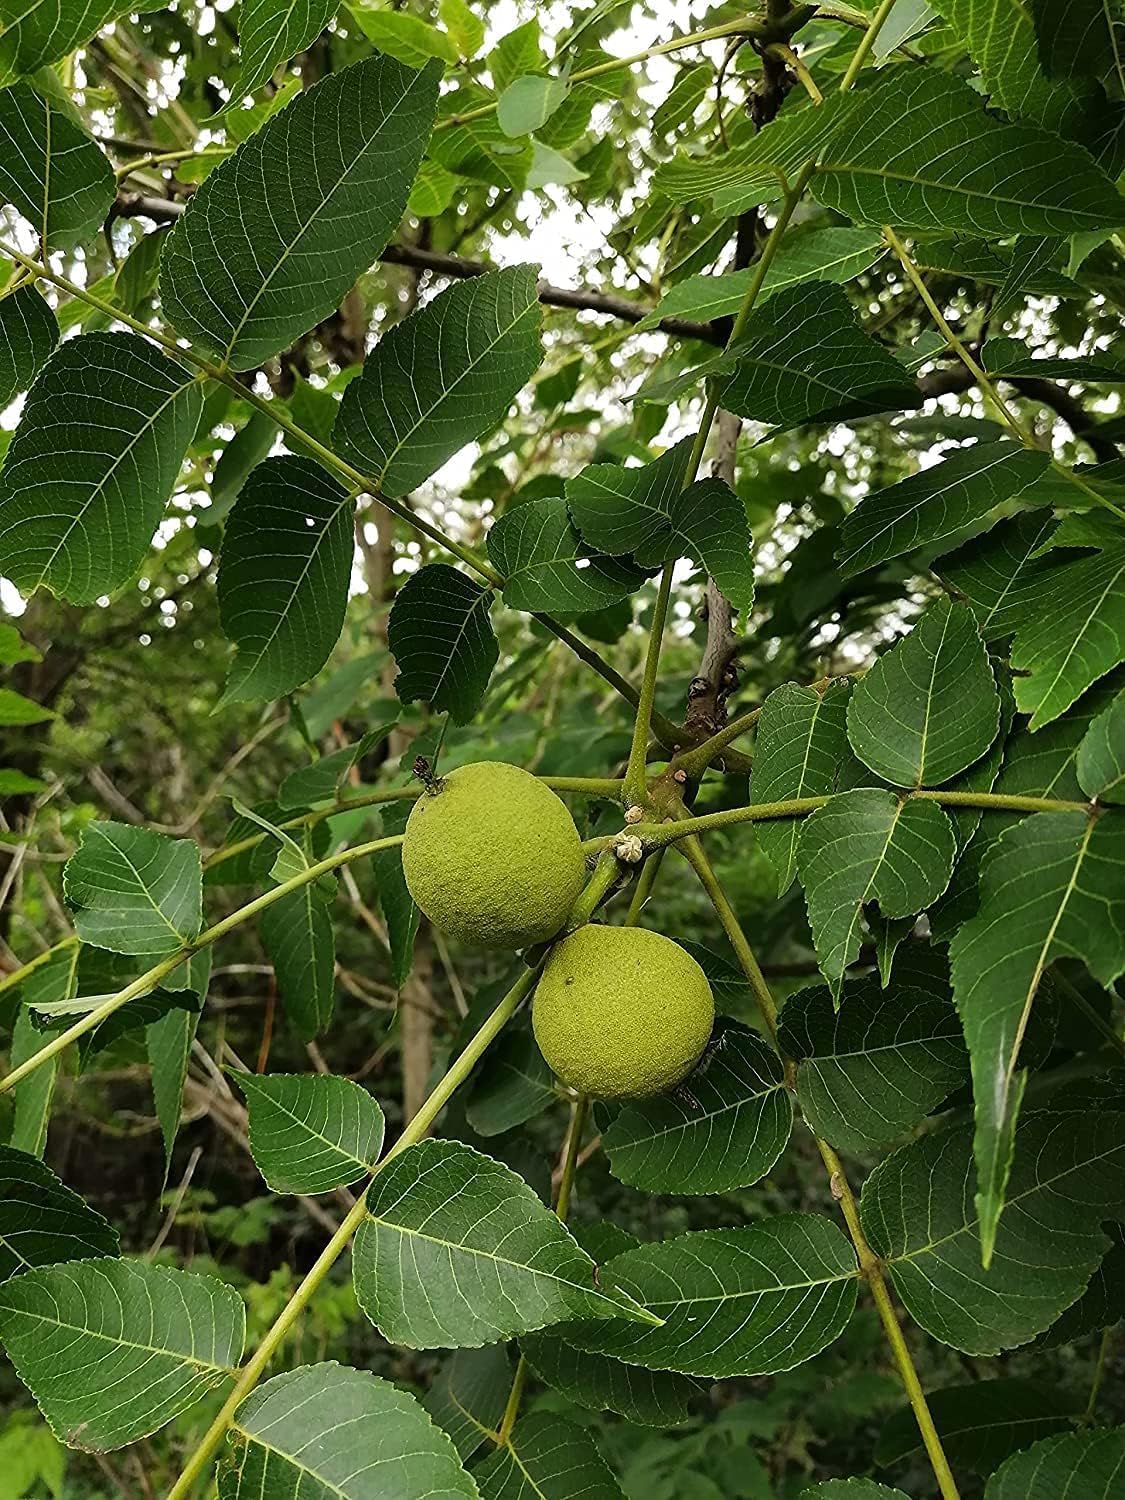 Hundredfold Ontario Grown Raw Black Walnut 2 Pounds (LB) Tree Seeds - Juglans nigra Unshelled Eastern Black Walnut Canada Native Tree